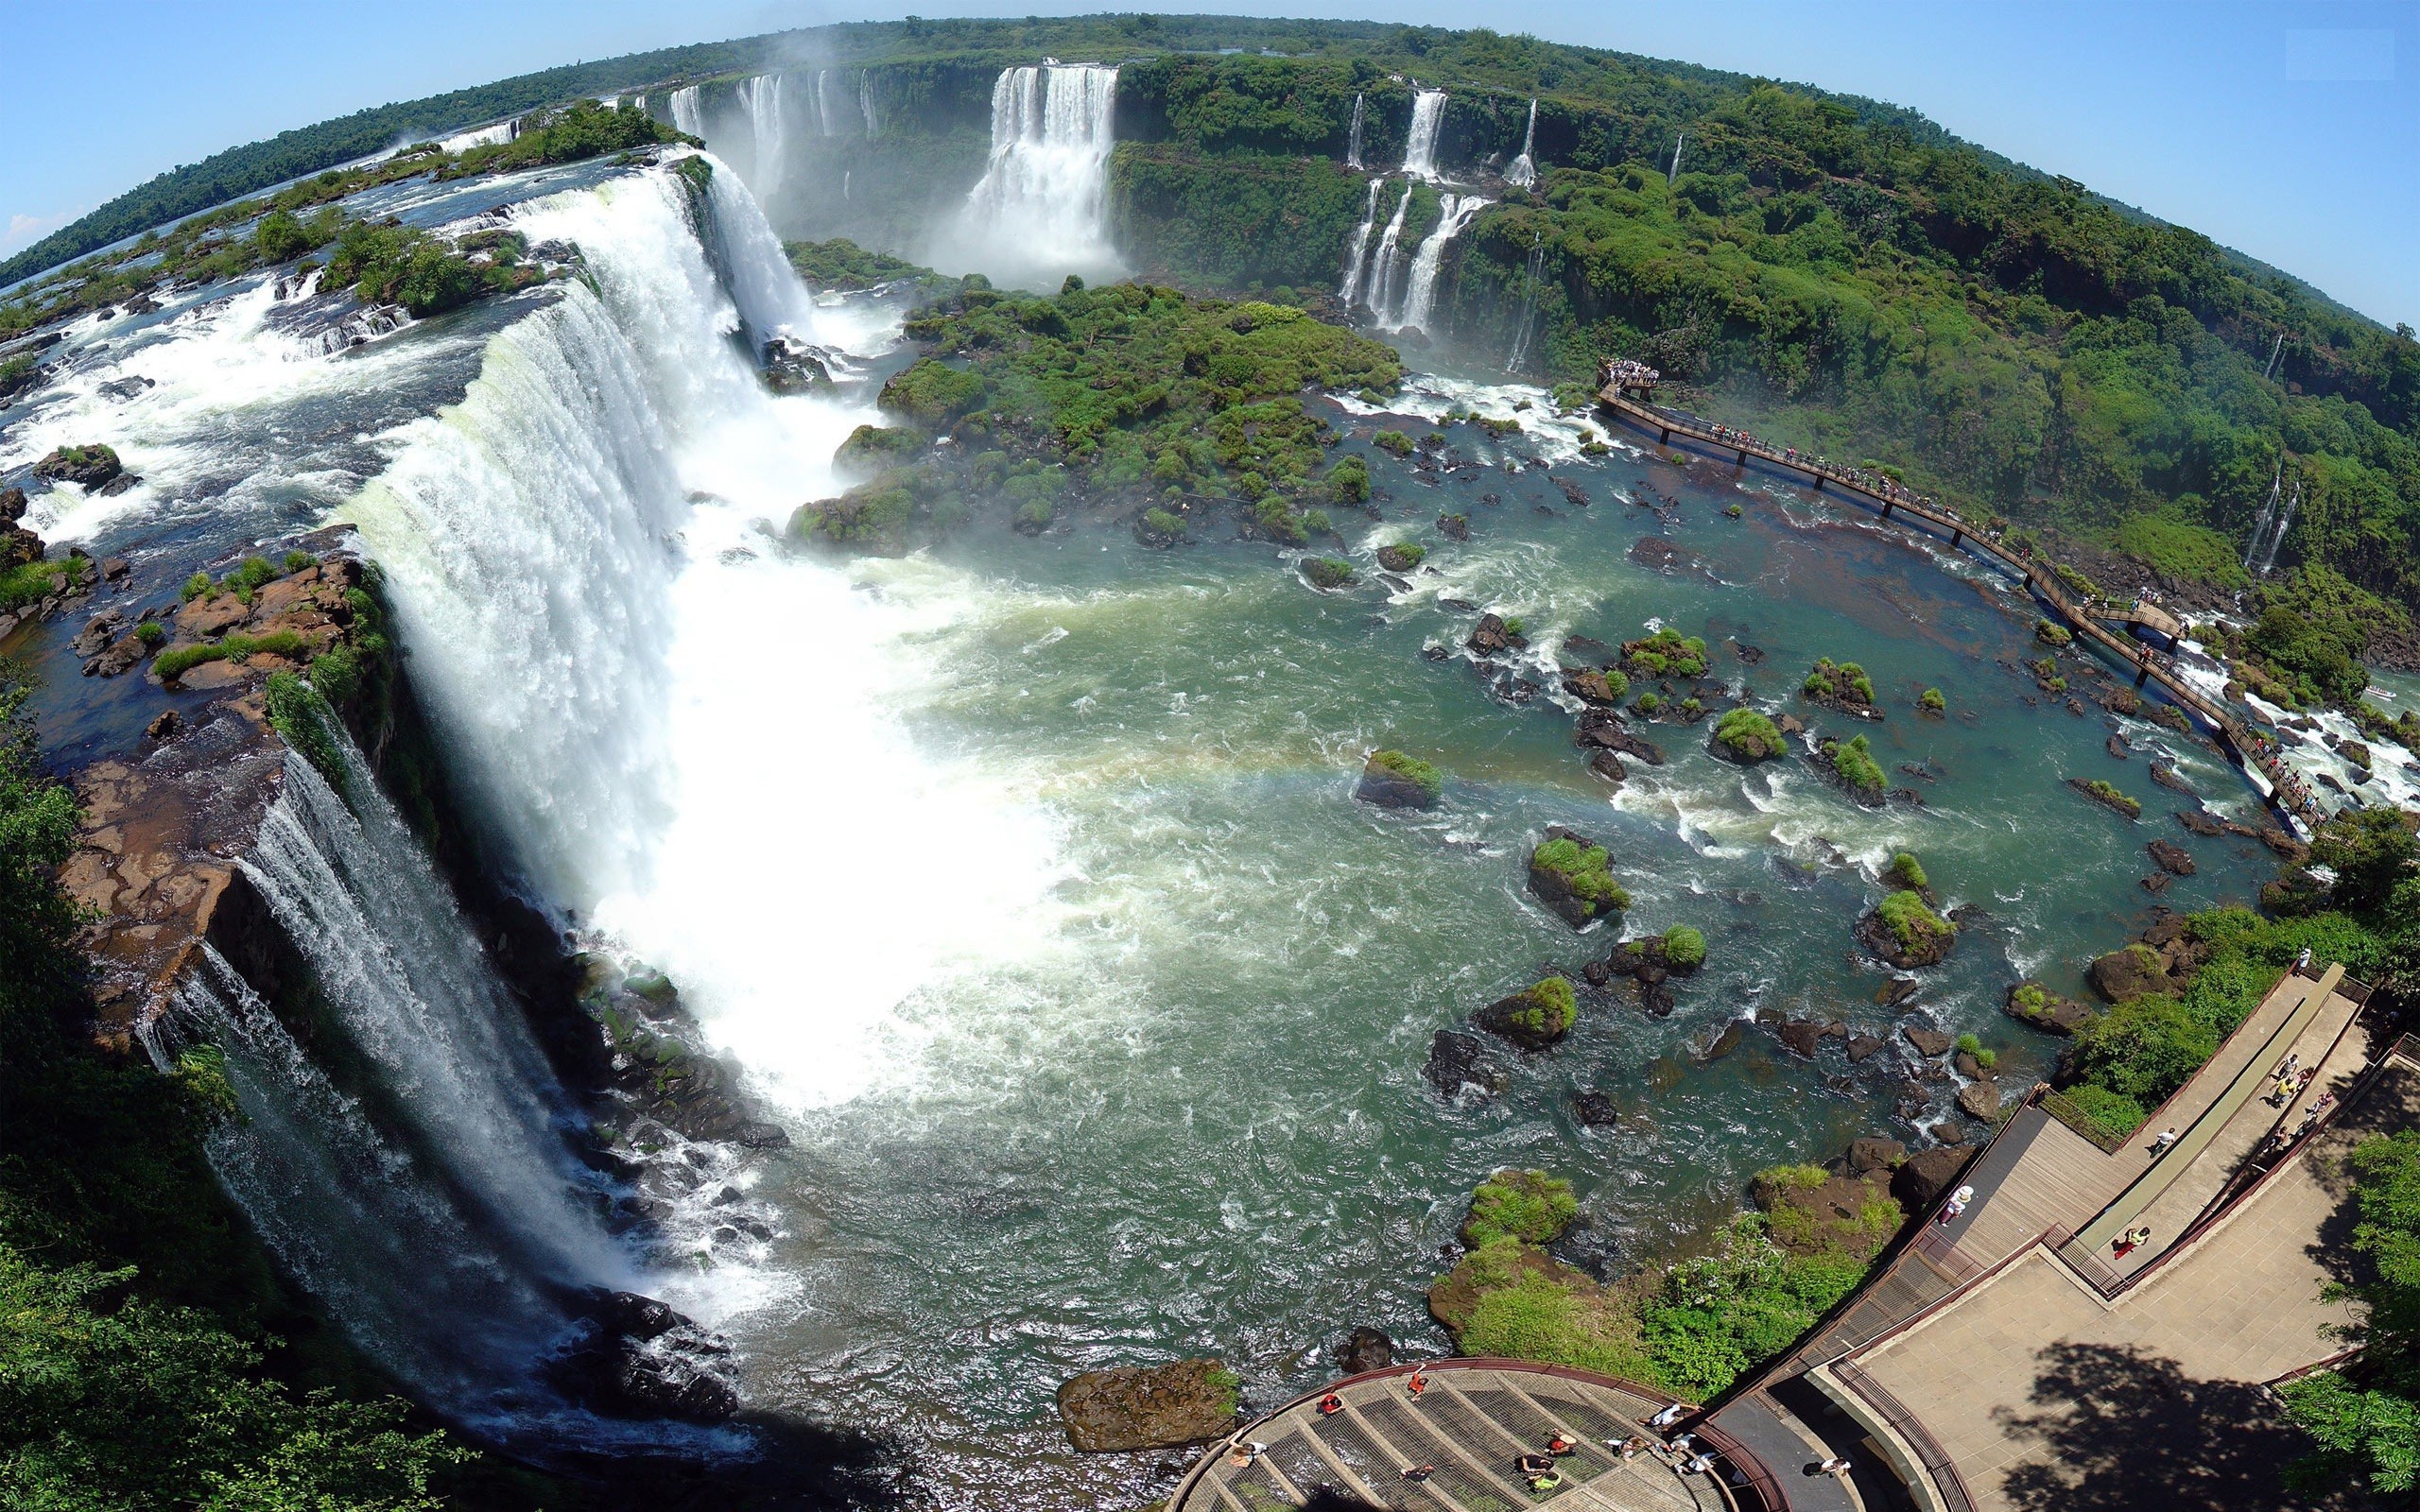 General 2560x1600 nature waterfall Iguazú Waterfalls water outdoors Brazil